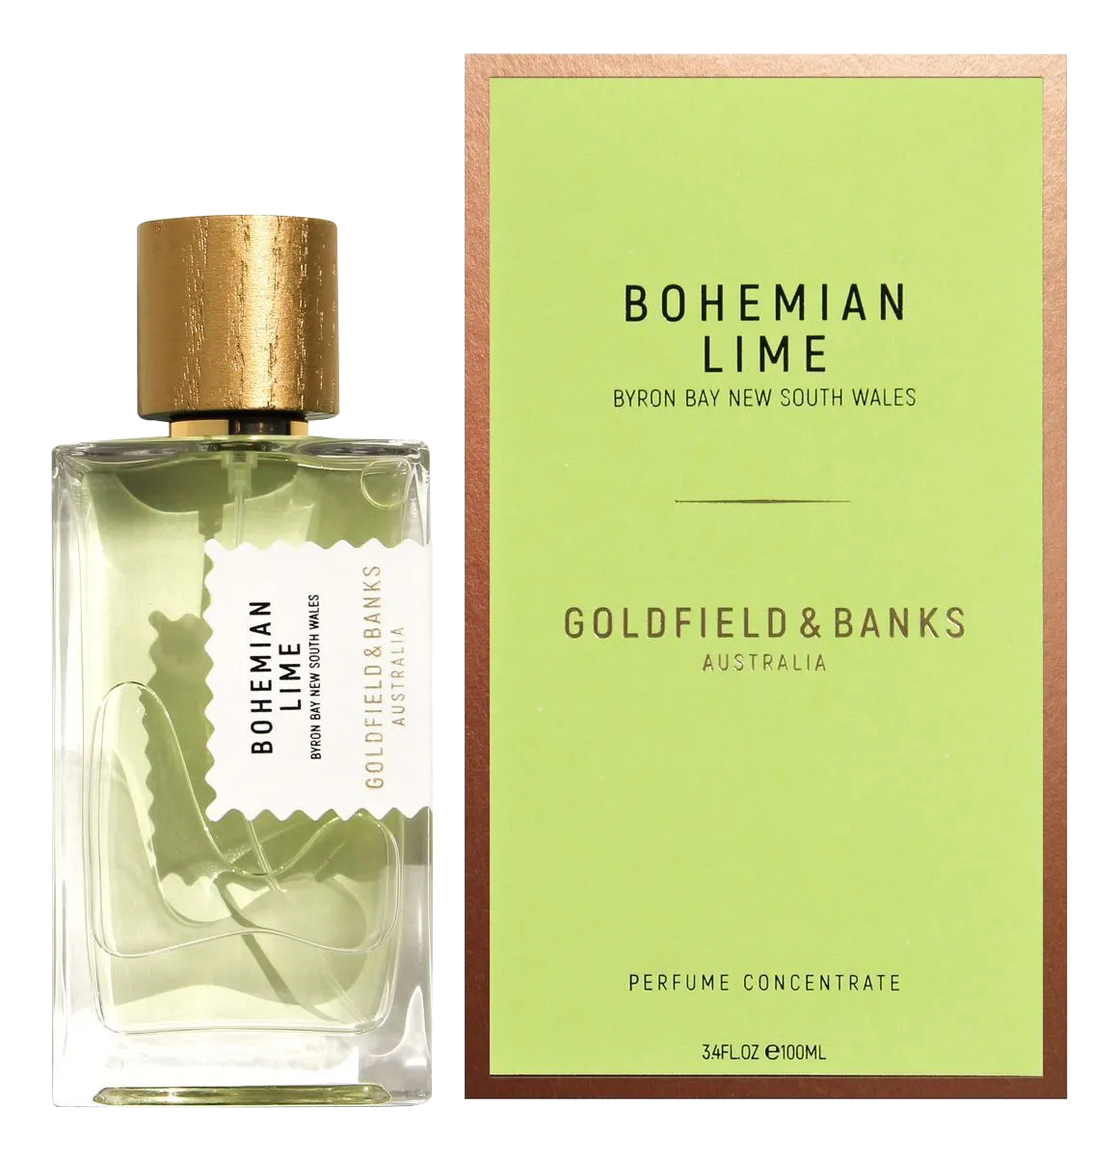 Goldfield & Banks Australia - Bohemian Lime